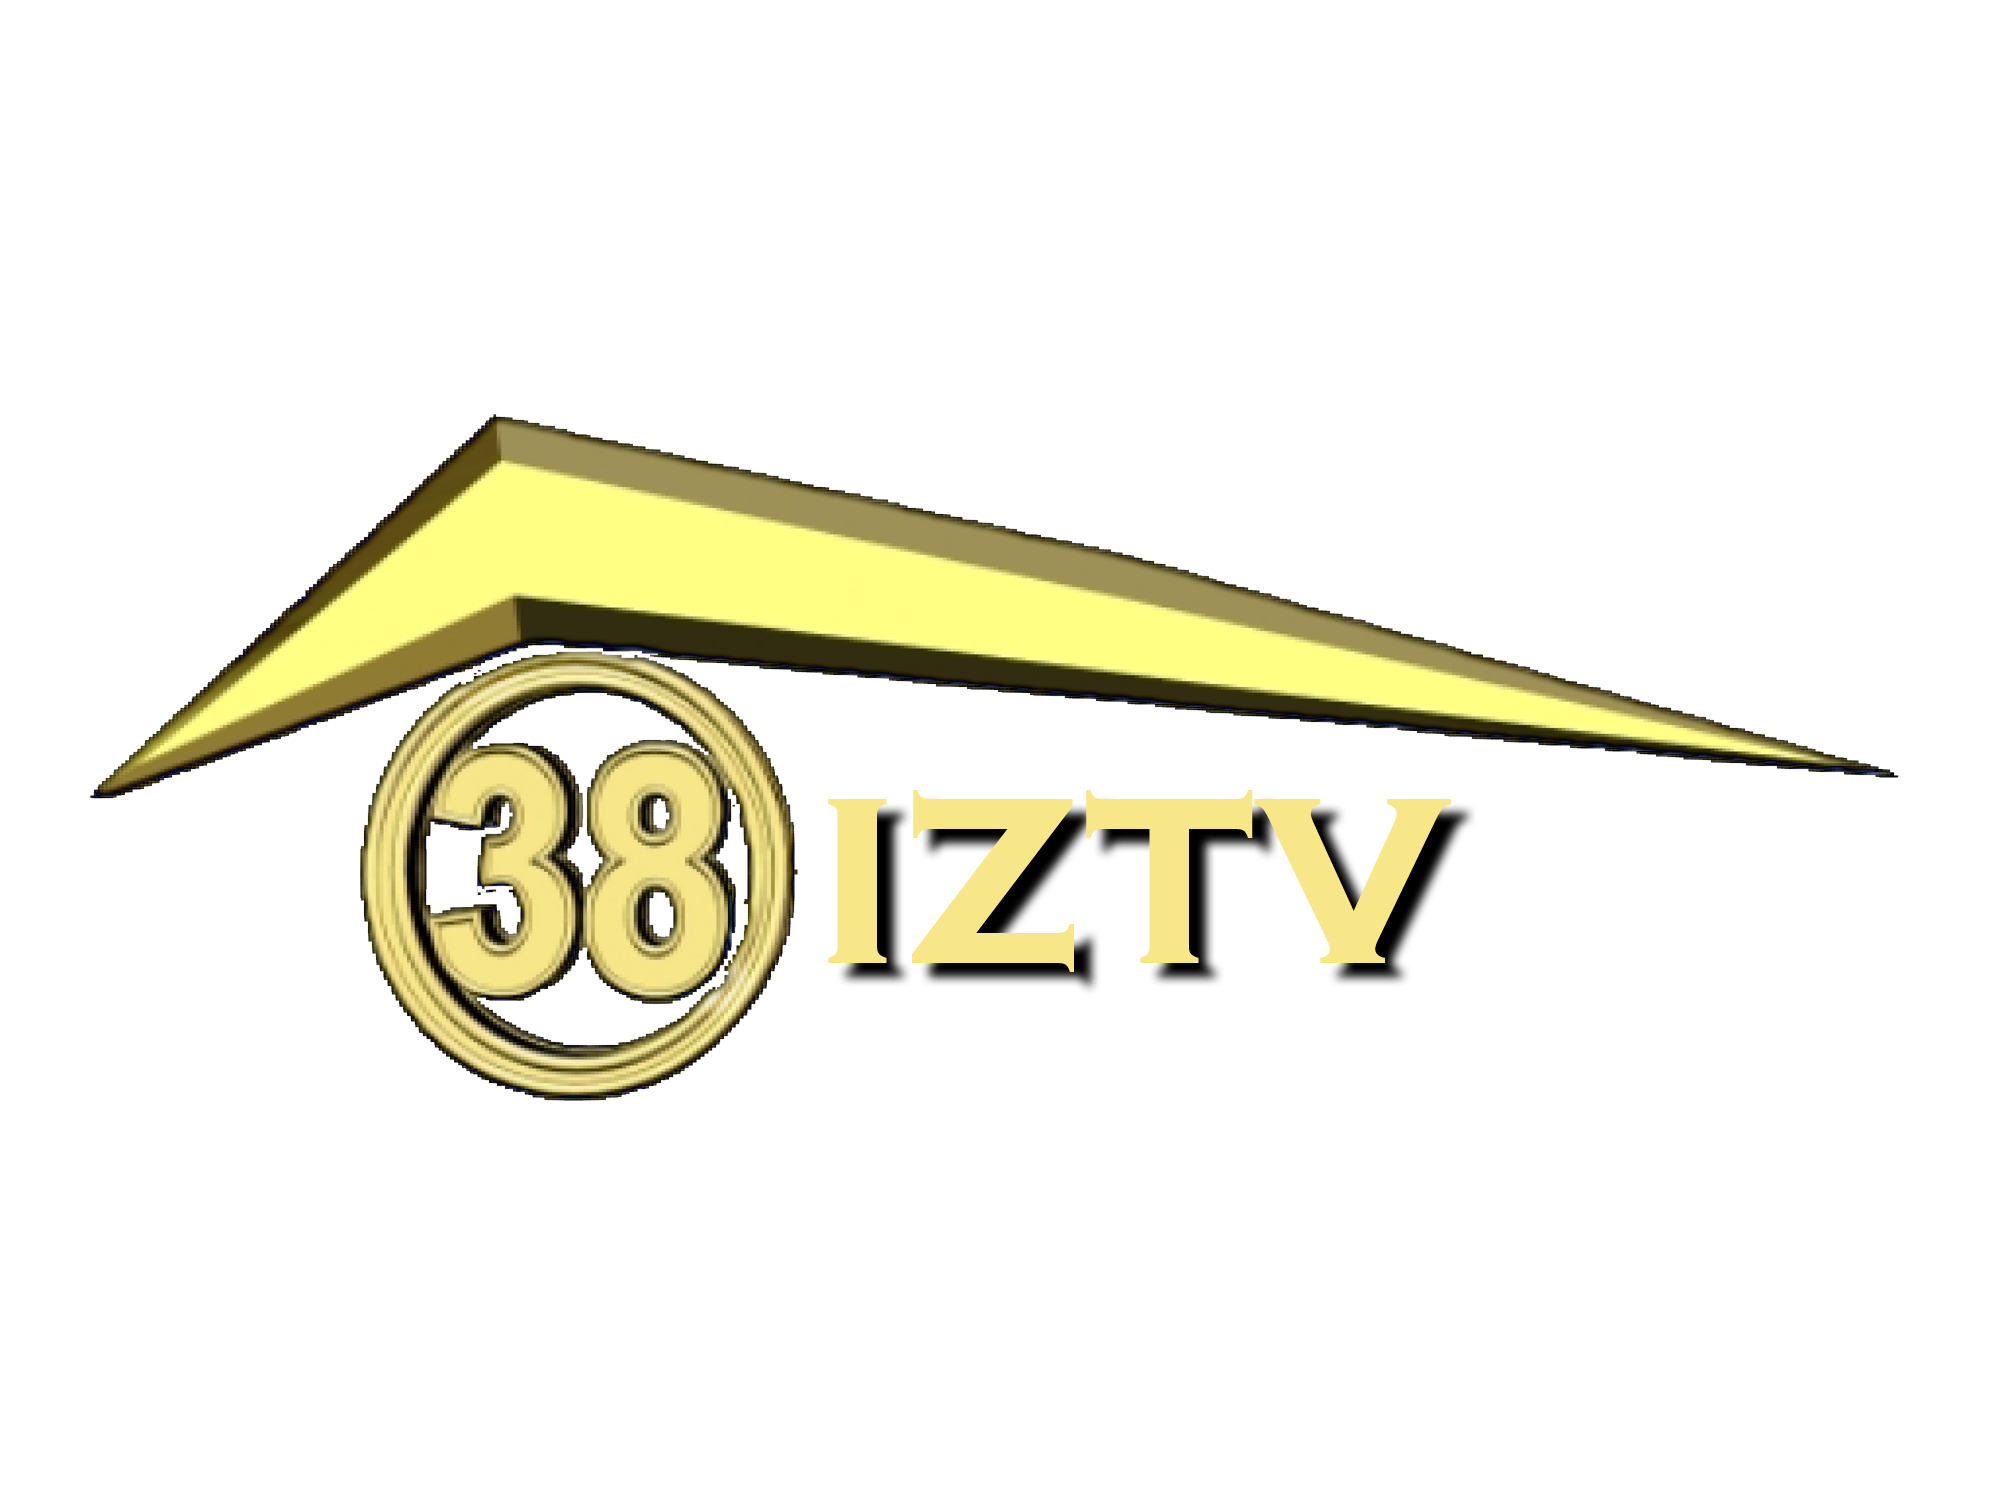 38iztv logo